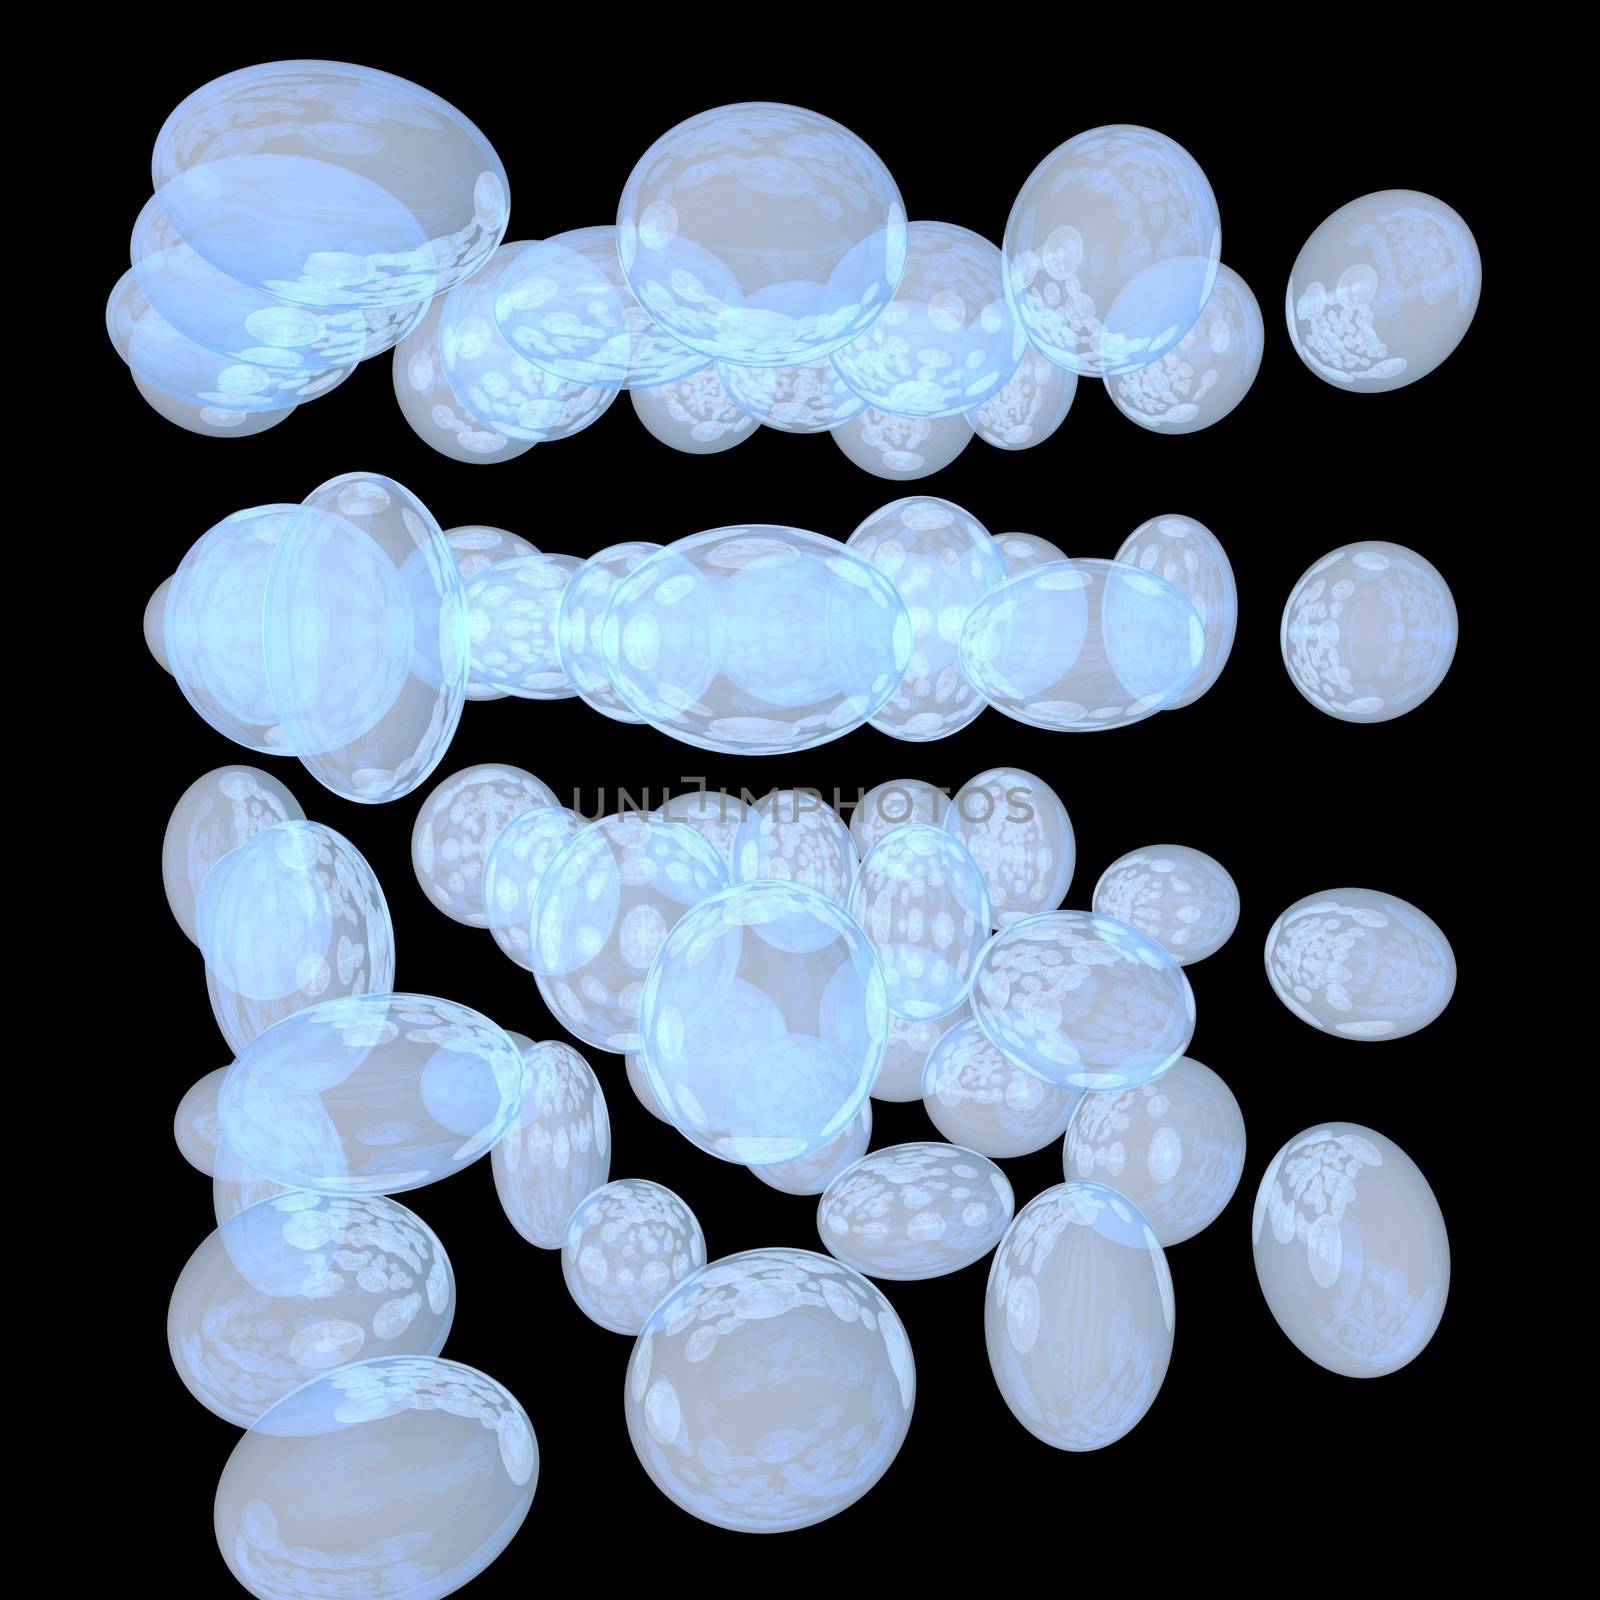 Bubbles by Koufax73